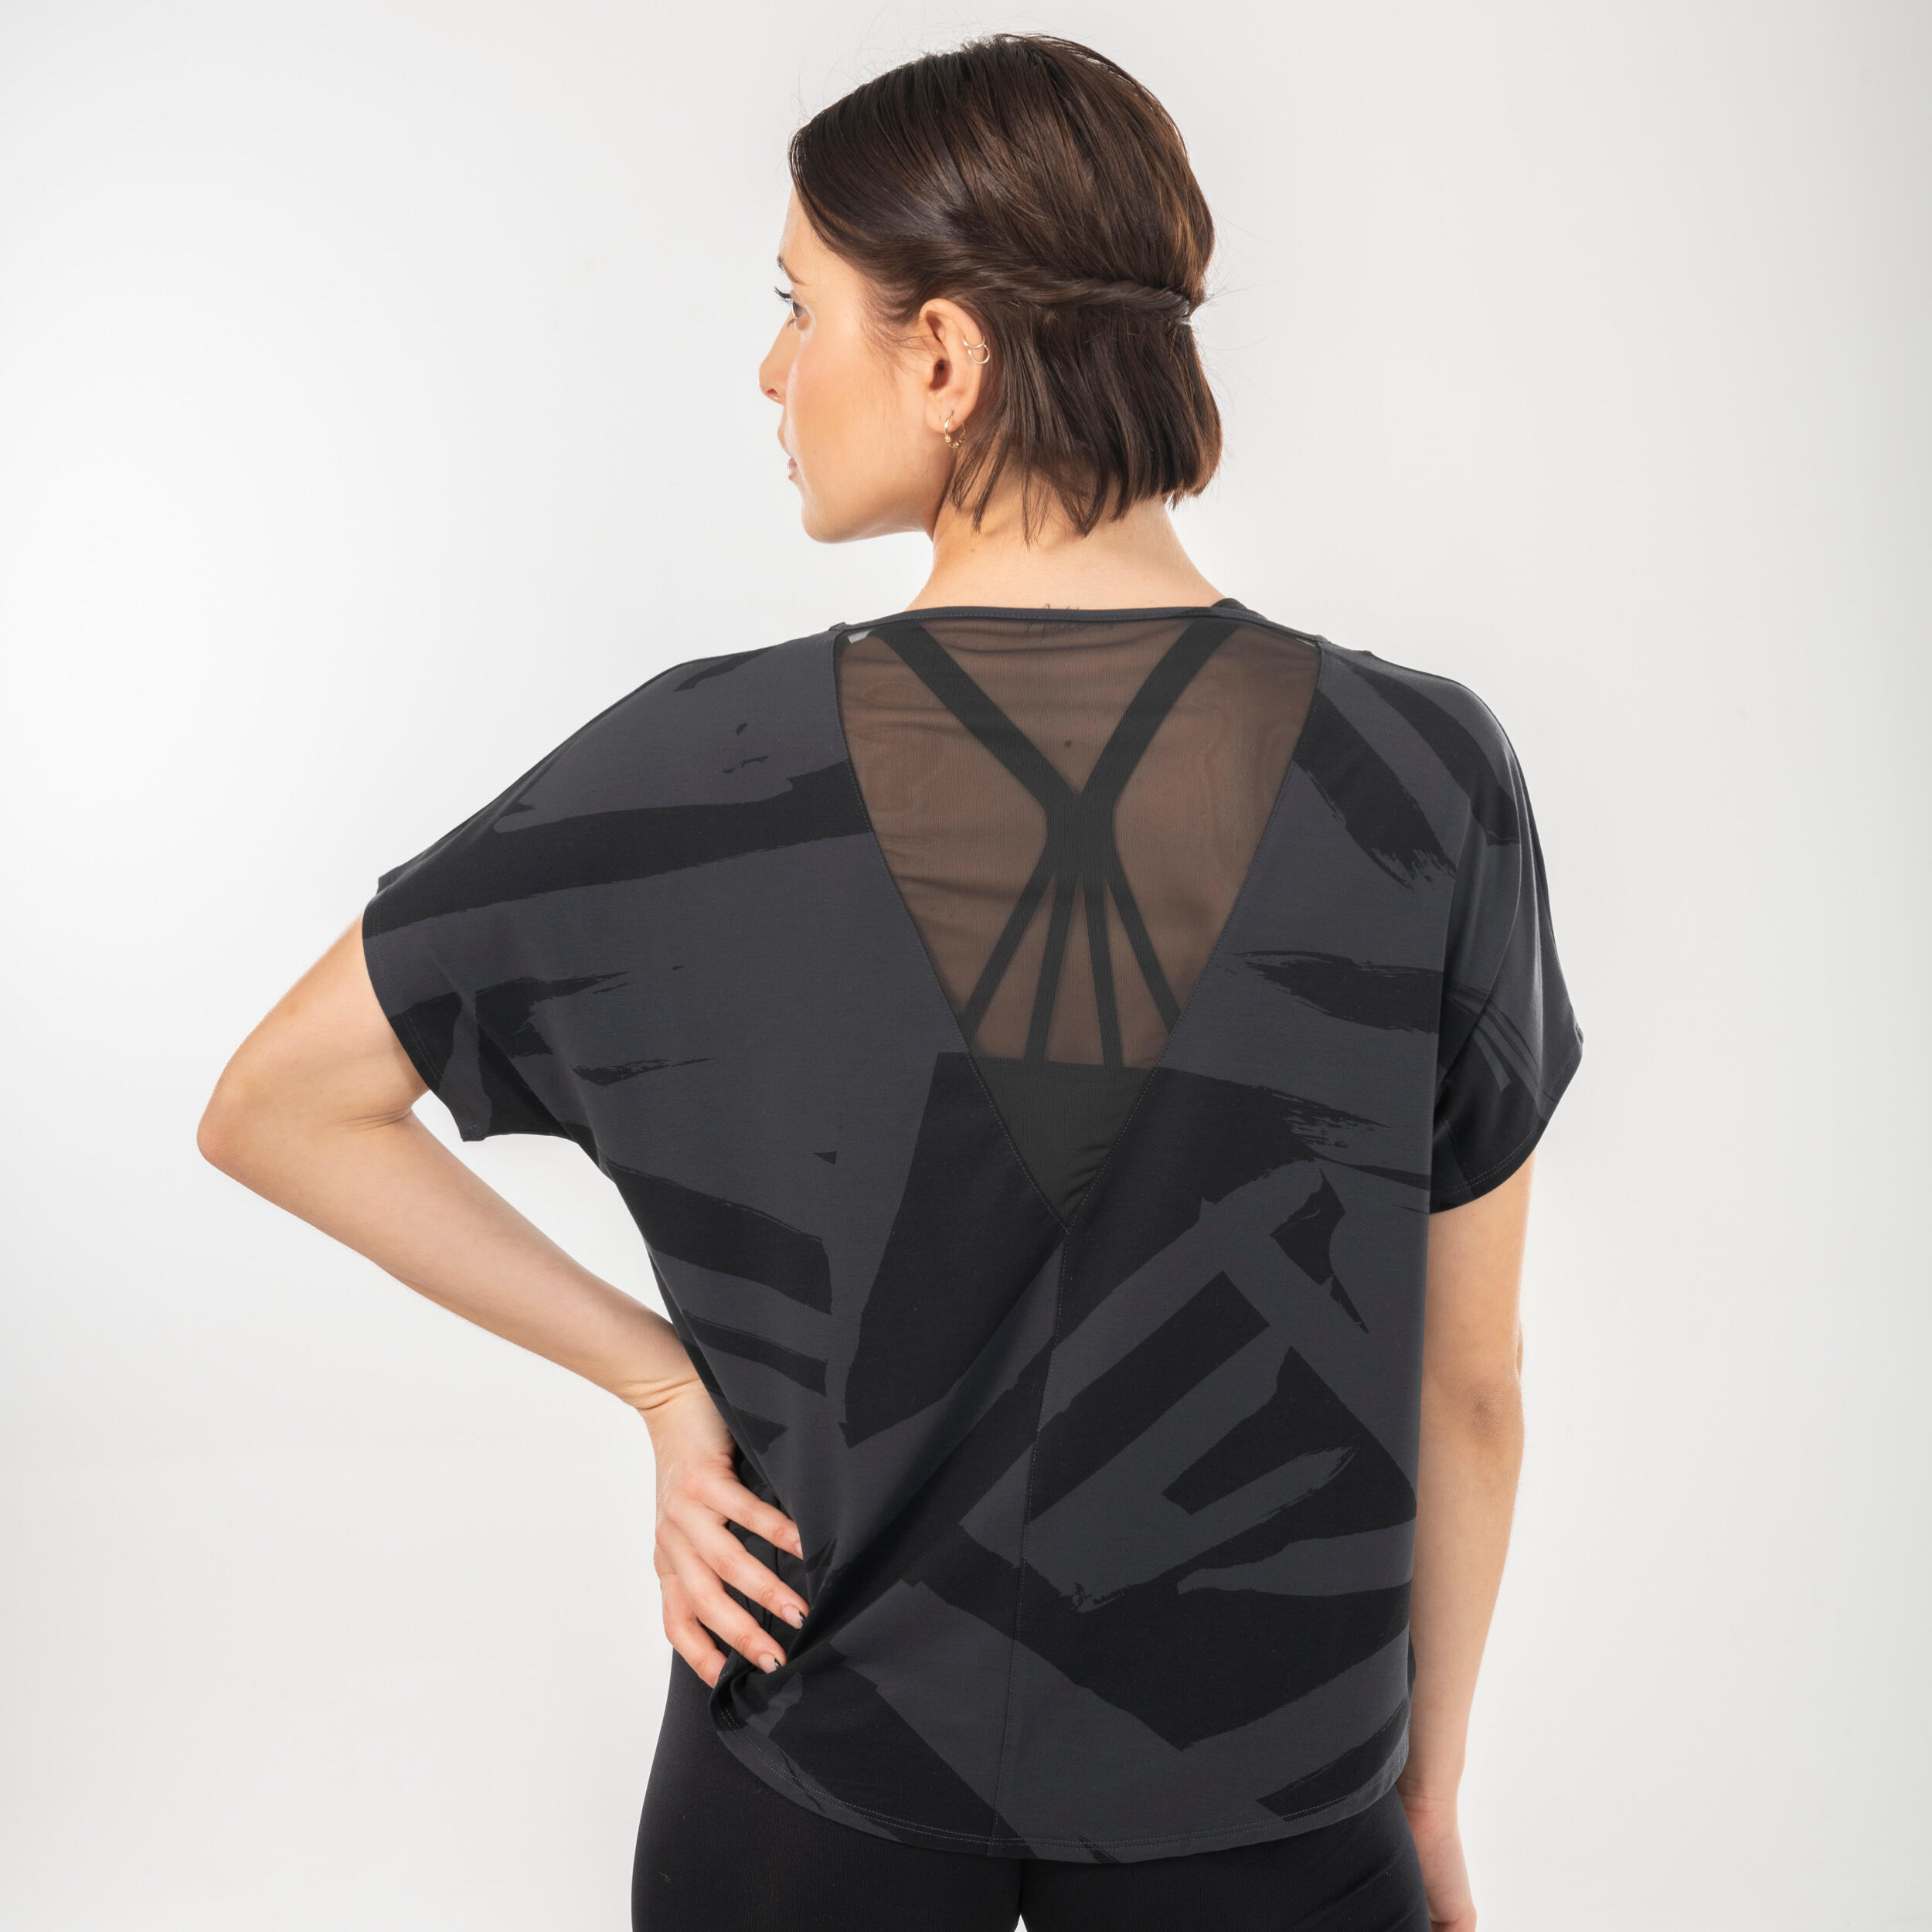 STAREVER Women's Short-Sleeved Modern Dancing Flowing T-Shirt - Grey/Black